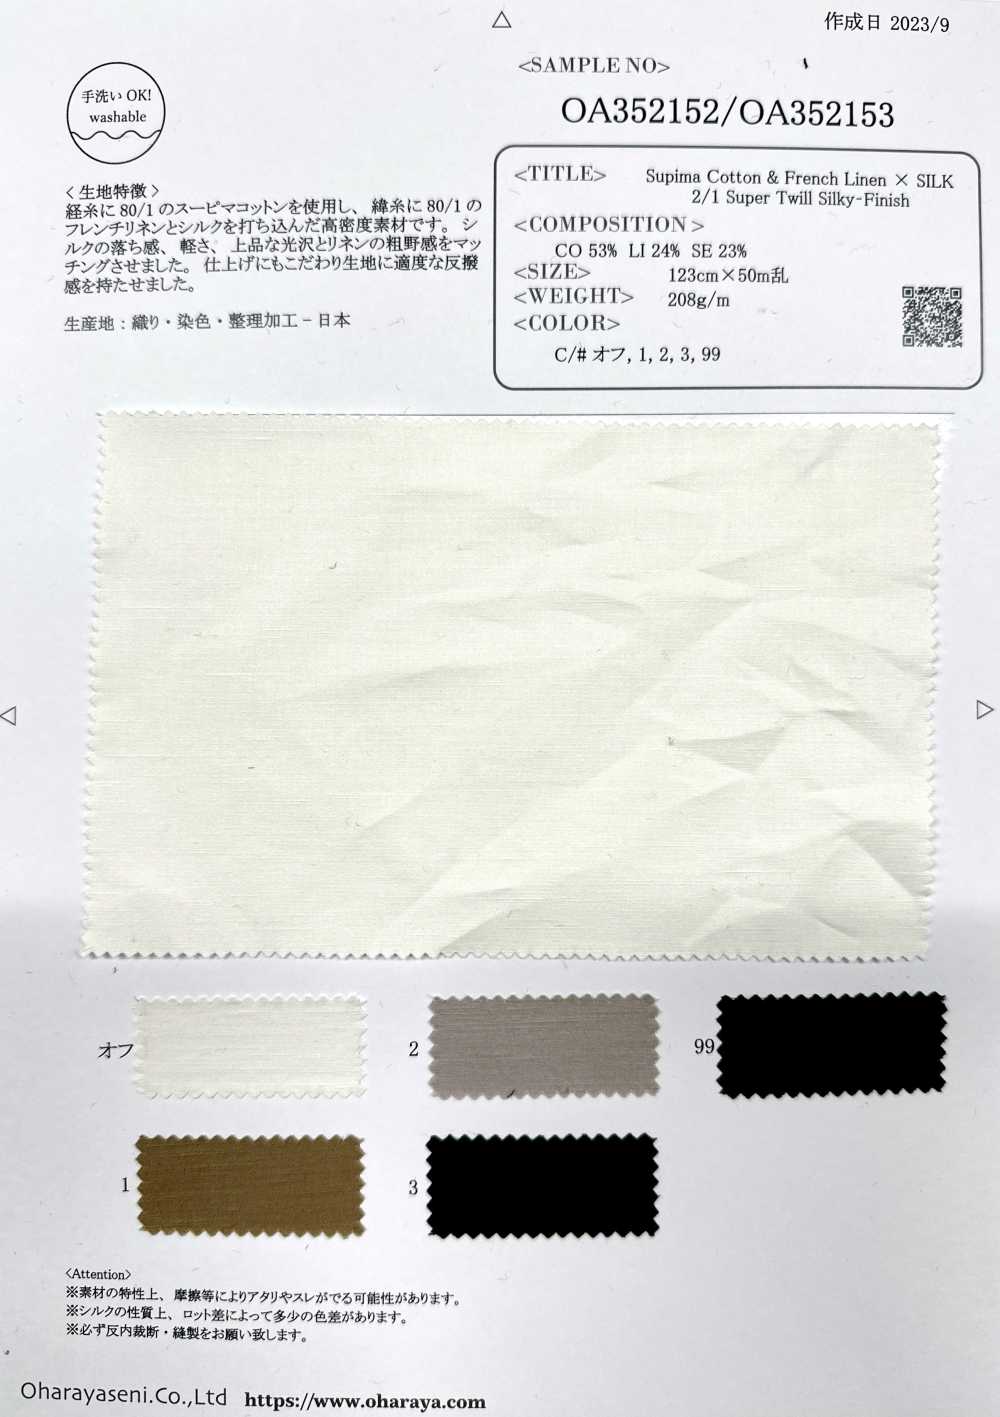 OA352153 Coton Supima & Lin Français × SOIE 2/1 Super Twill Finition Soyeuse[Fabrication De Textile] Oharayaseni